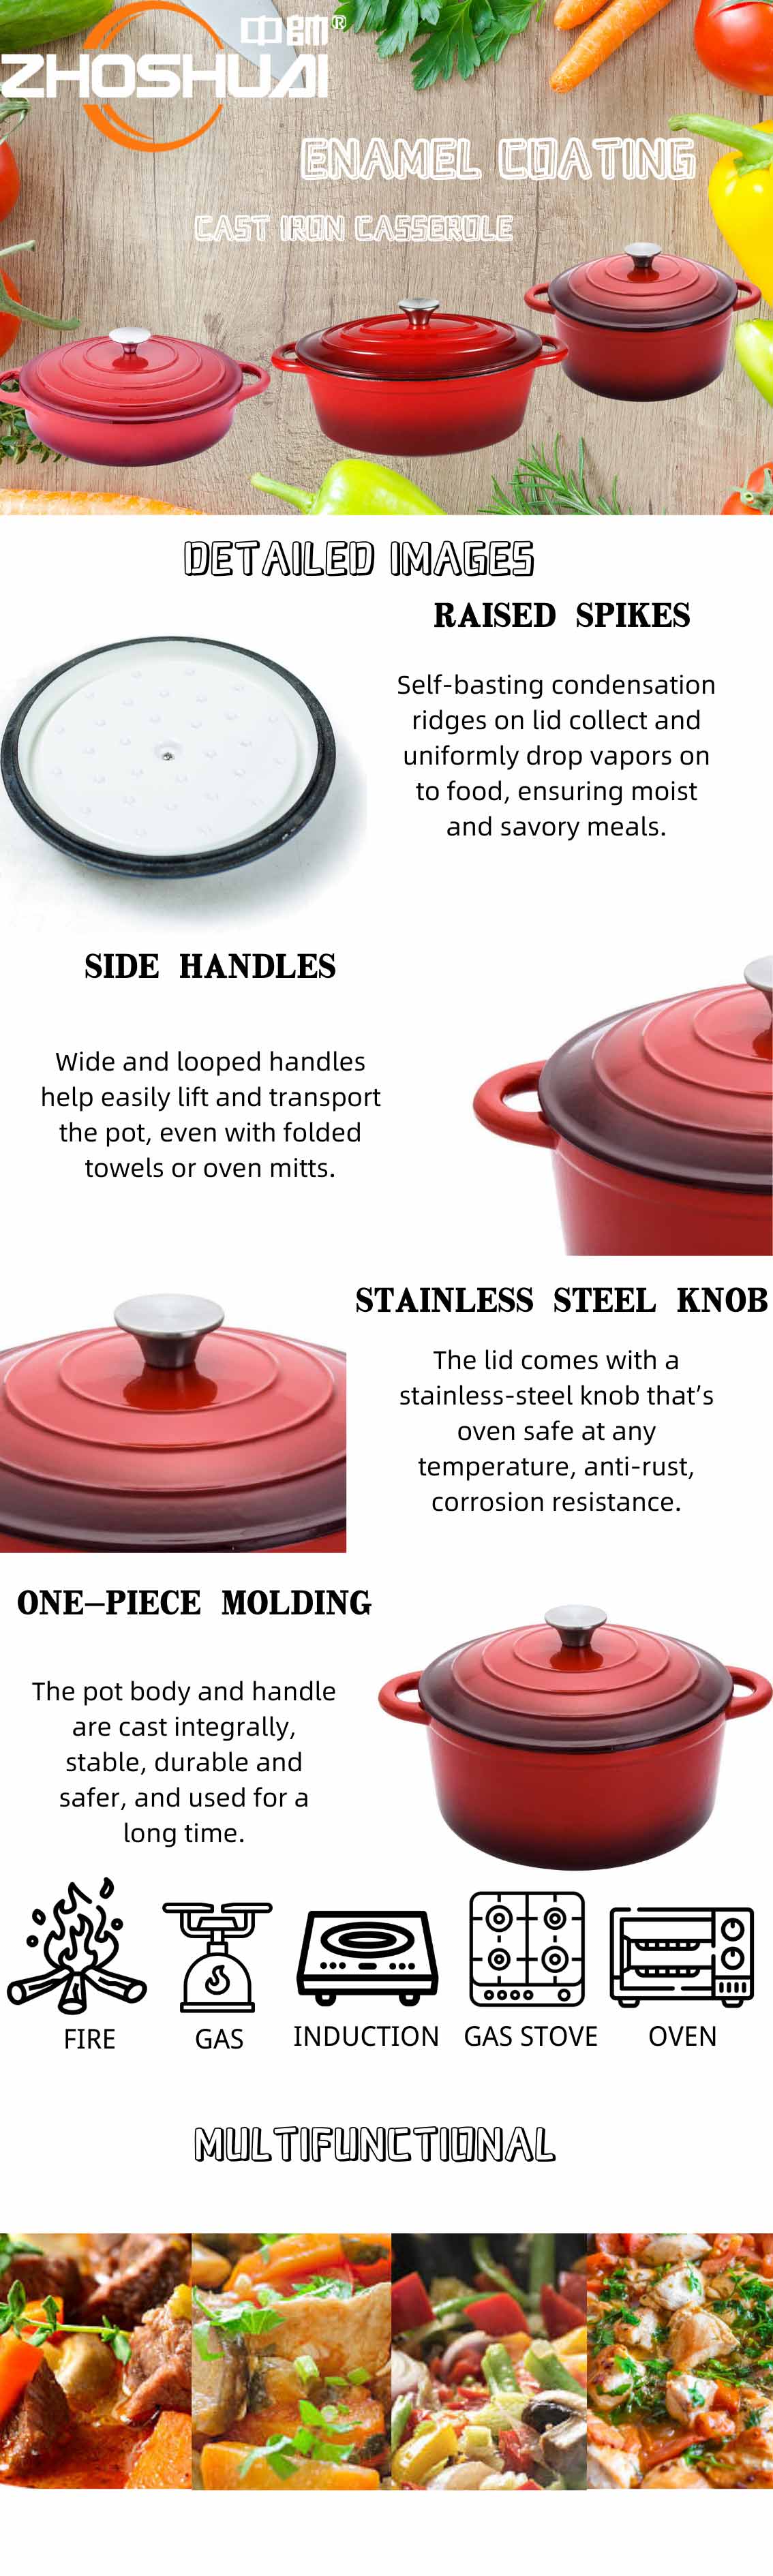 Red-enamel-coating-cast-iron-casserole